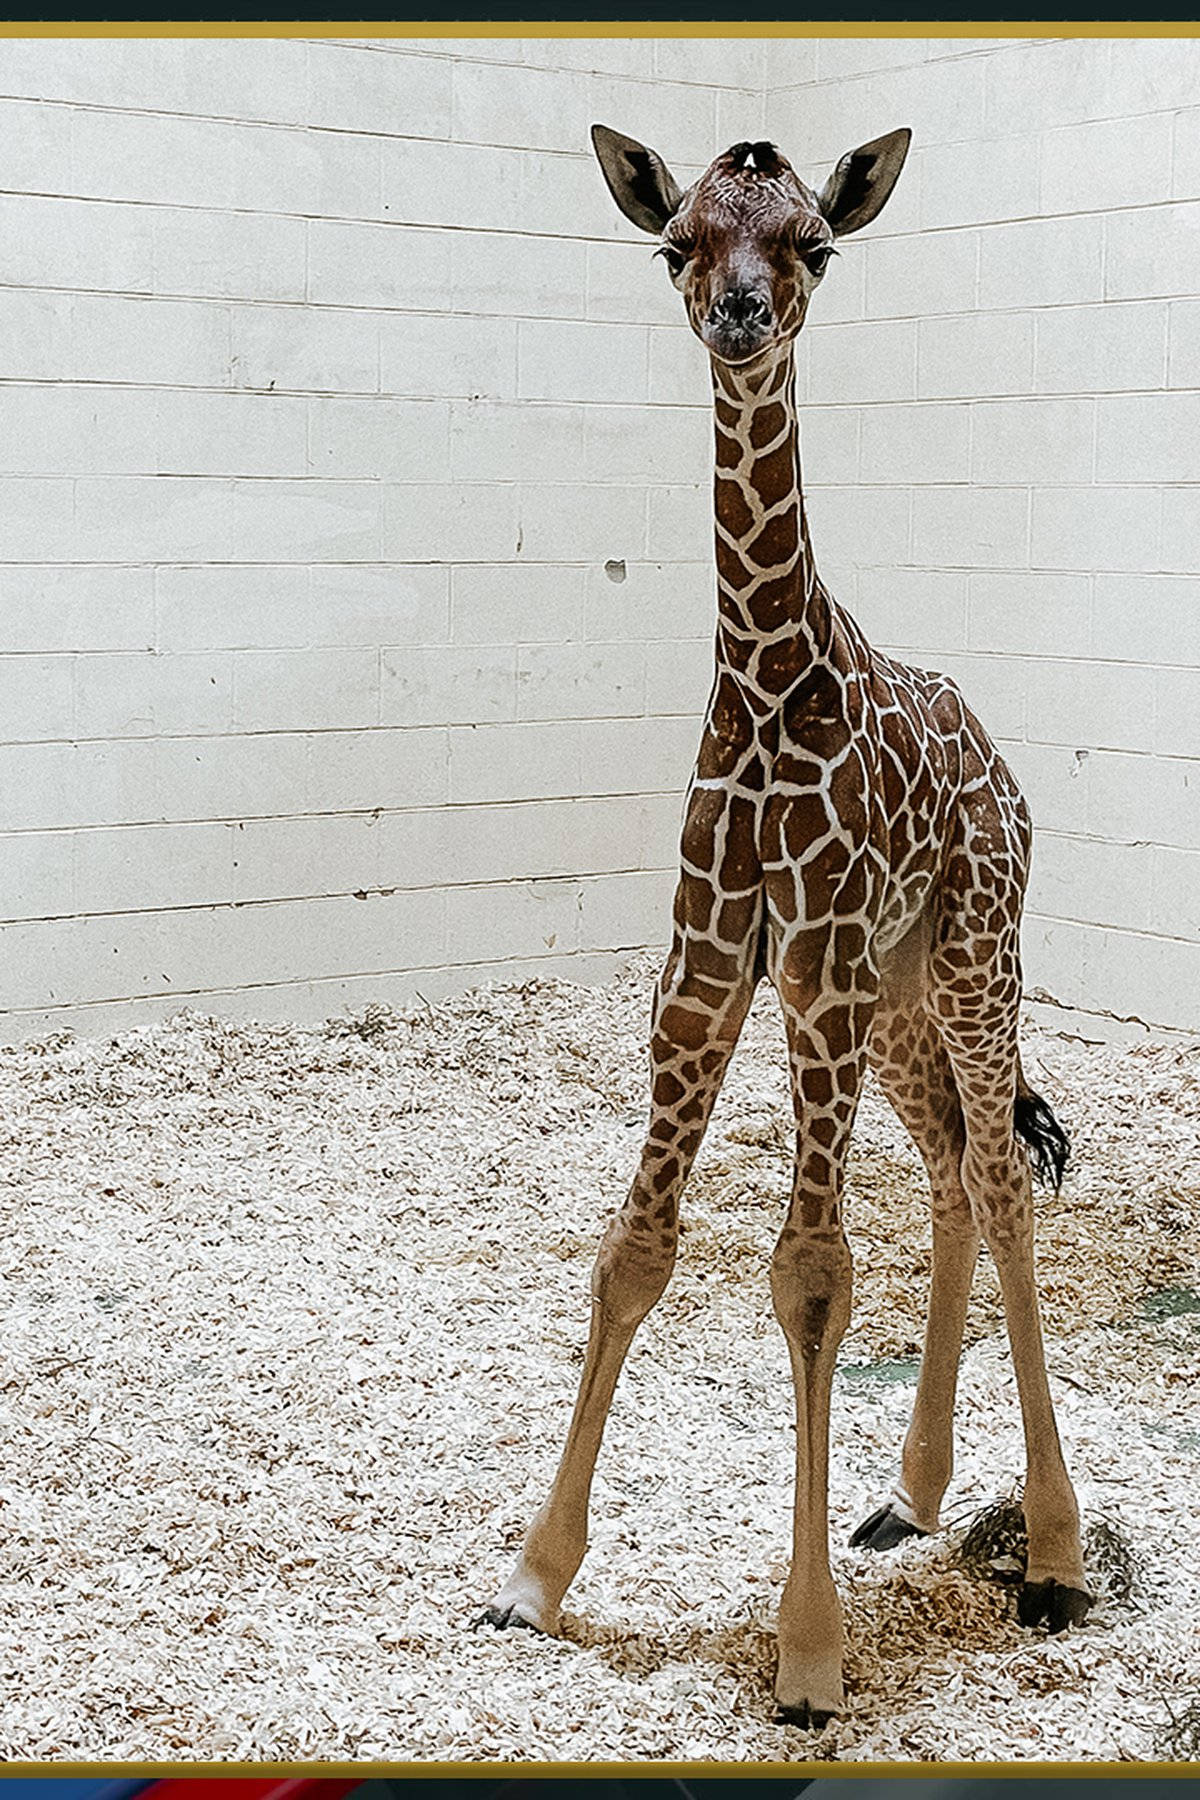 Baby Giraffe With Long Legs Wallpaper